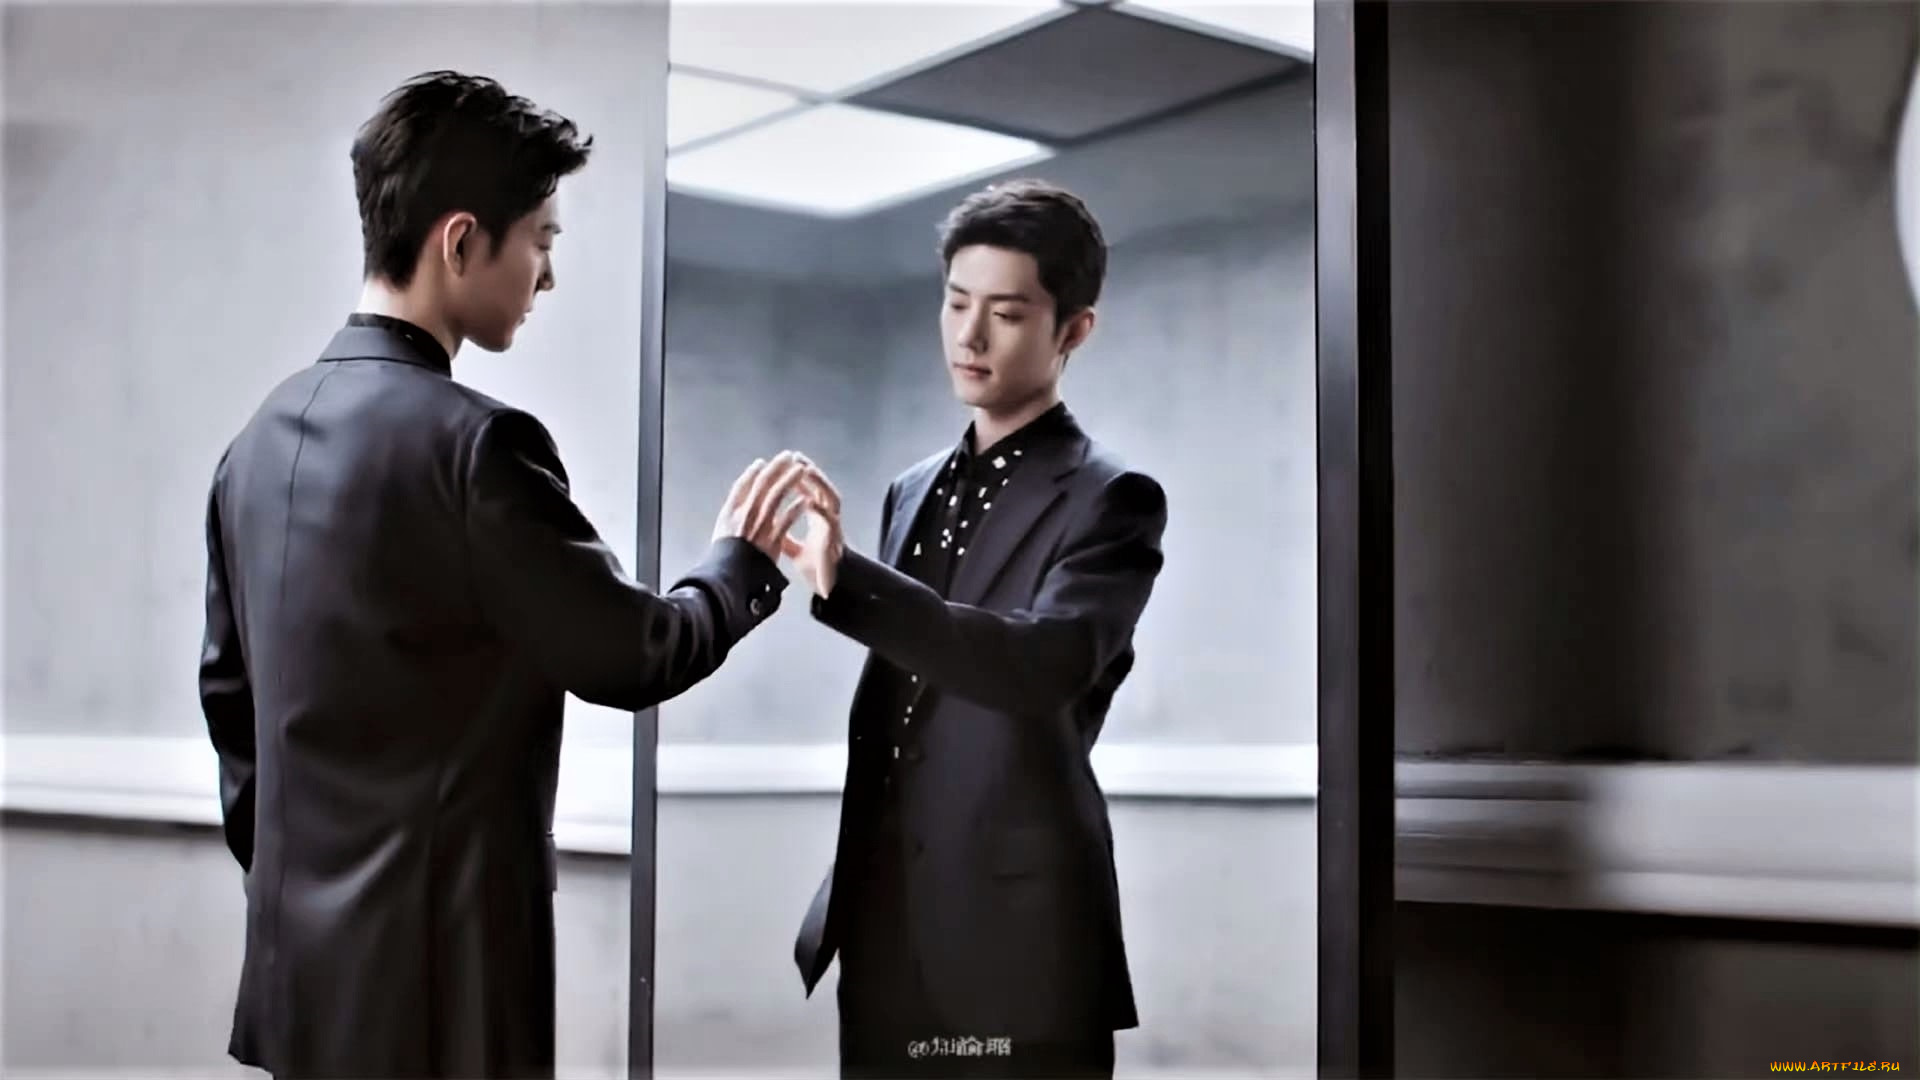 мужчины, xiao, zhan, актер, зеркало, отражение